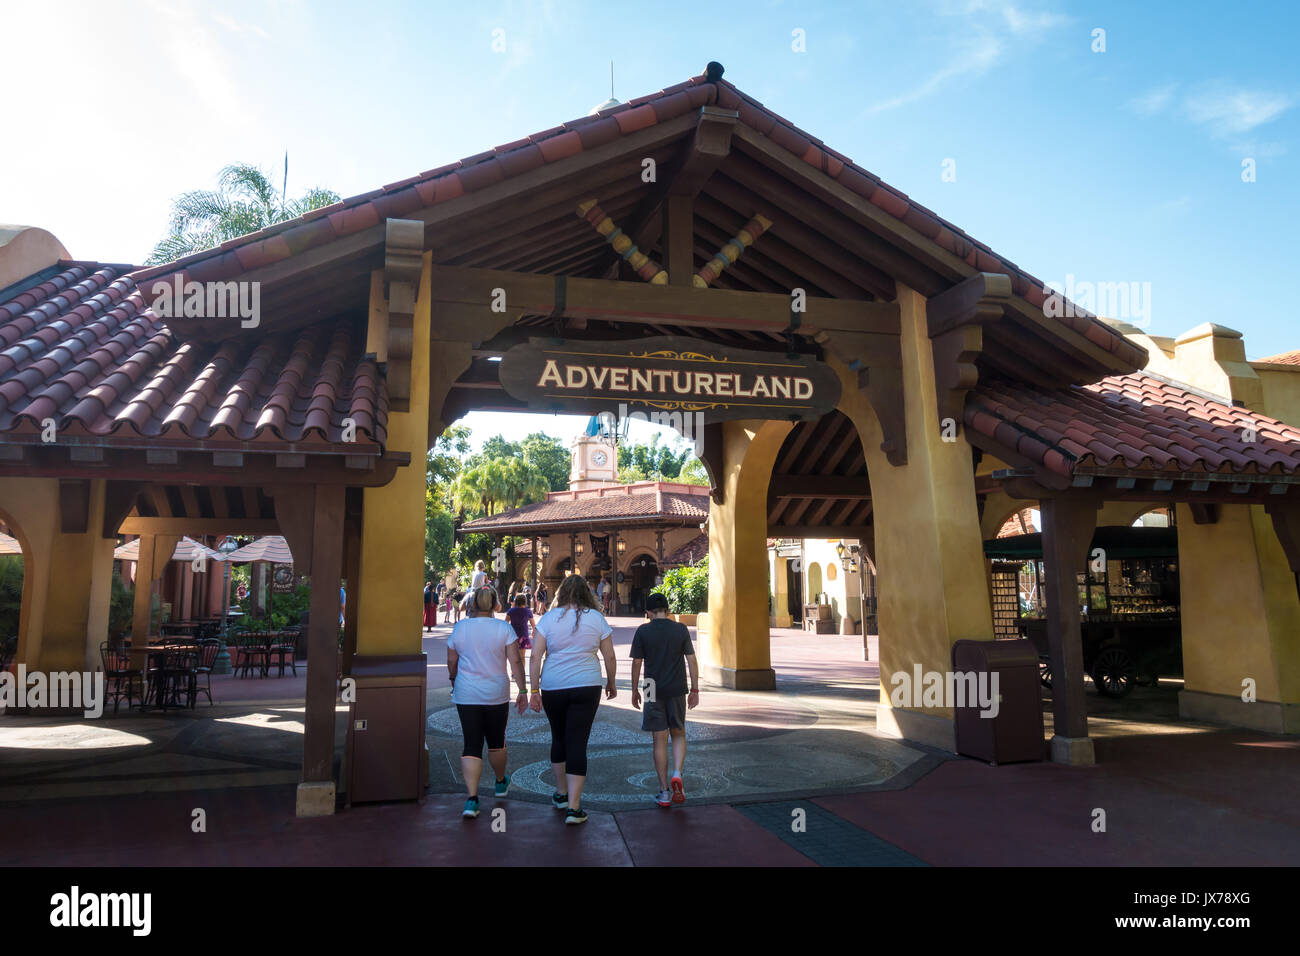 Ingresso adventureland nel Parco a Tema del Regno Magico, Walt Disney World, a Orlando, Florida. Foto Stock